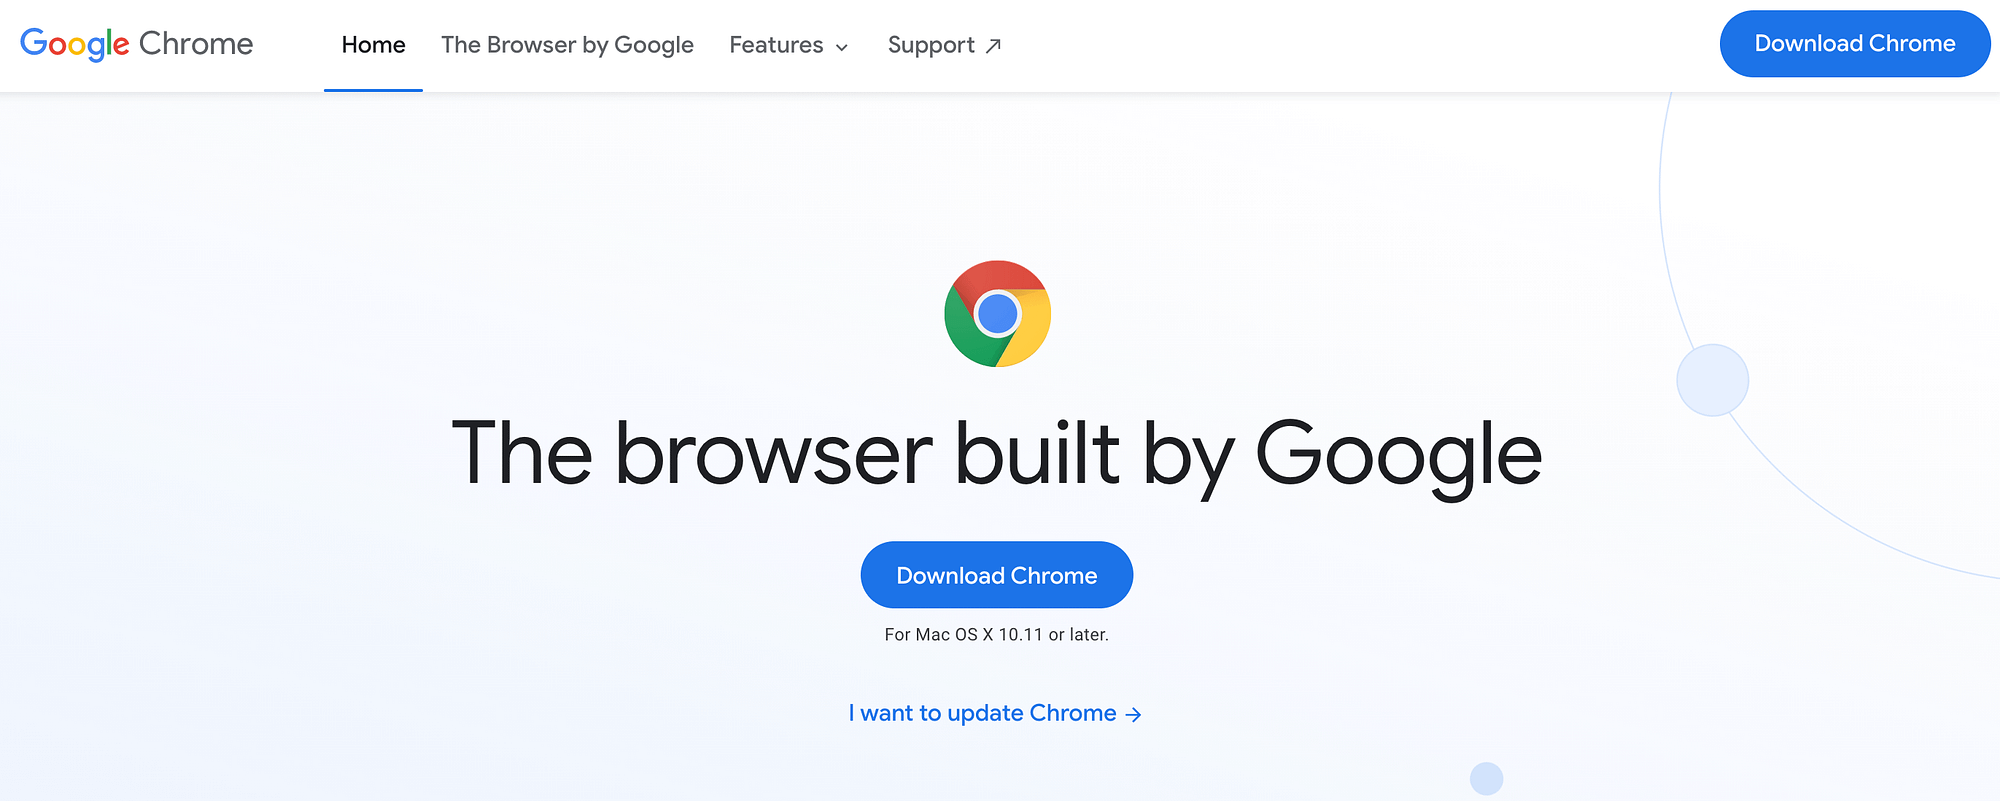 The Google Chrome web browser.